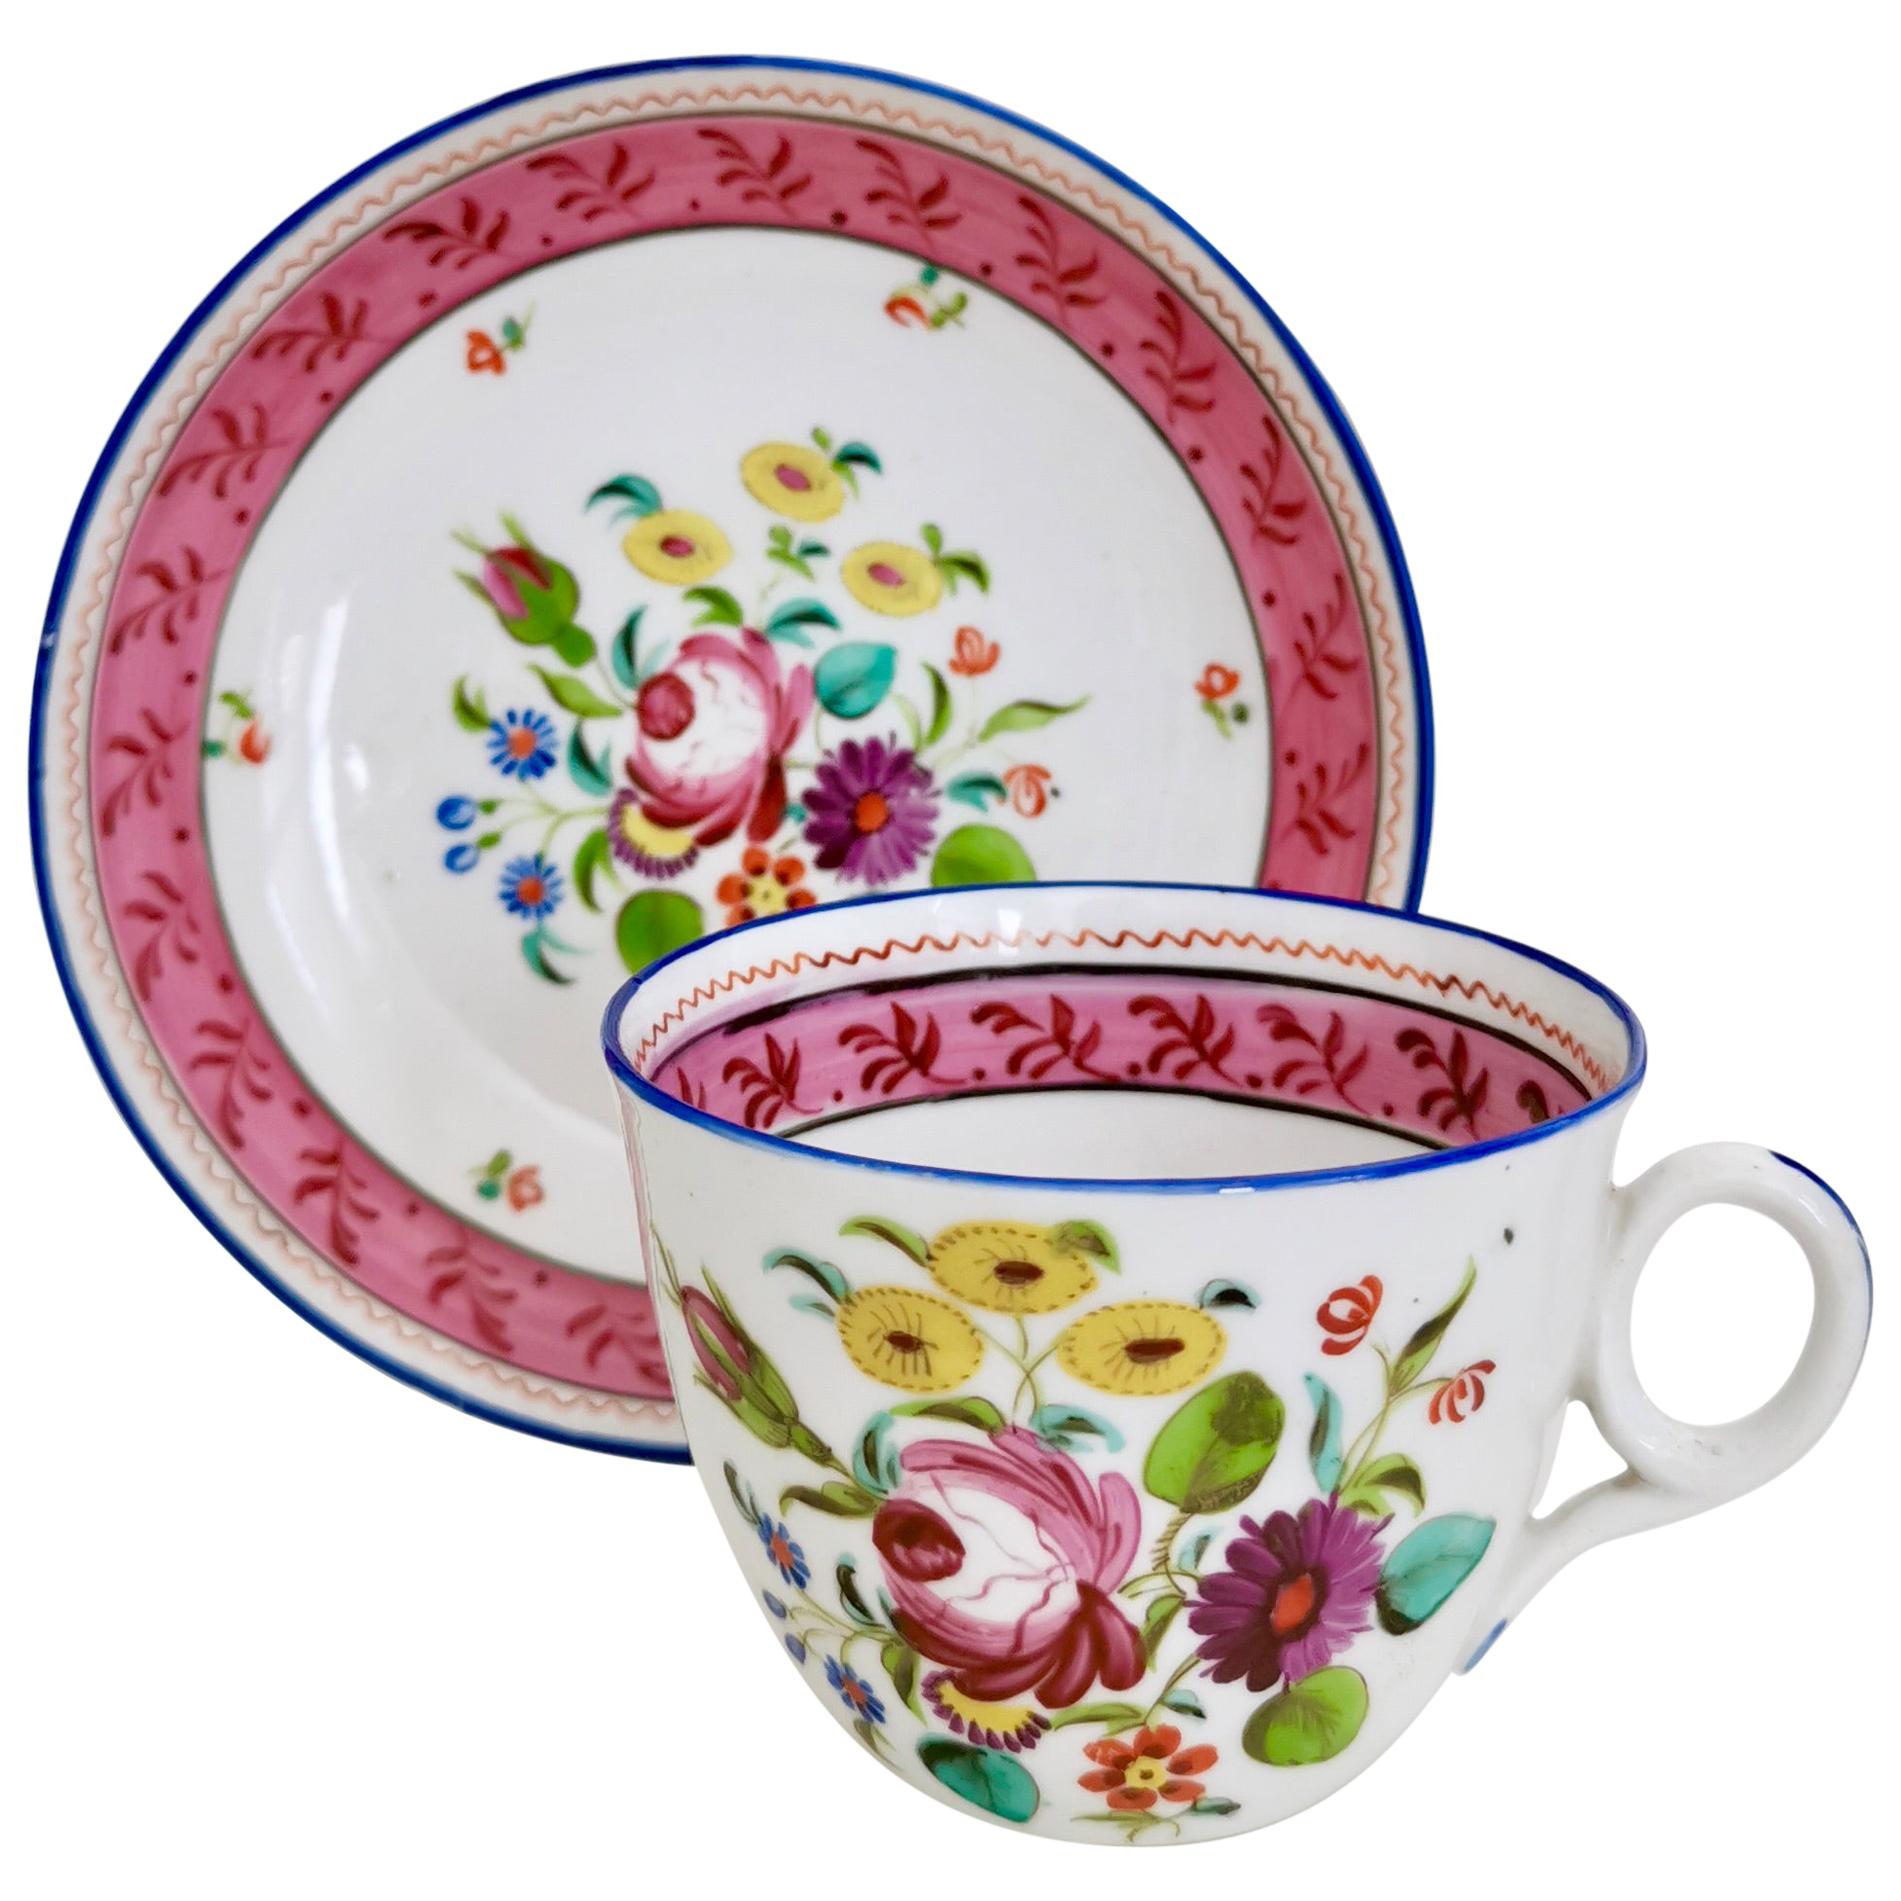 New Hall Porcelain Teacup, Hybrid Paste, Flowers Patt, 1180, circa 1815